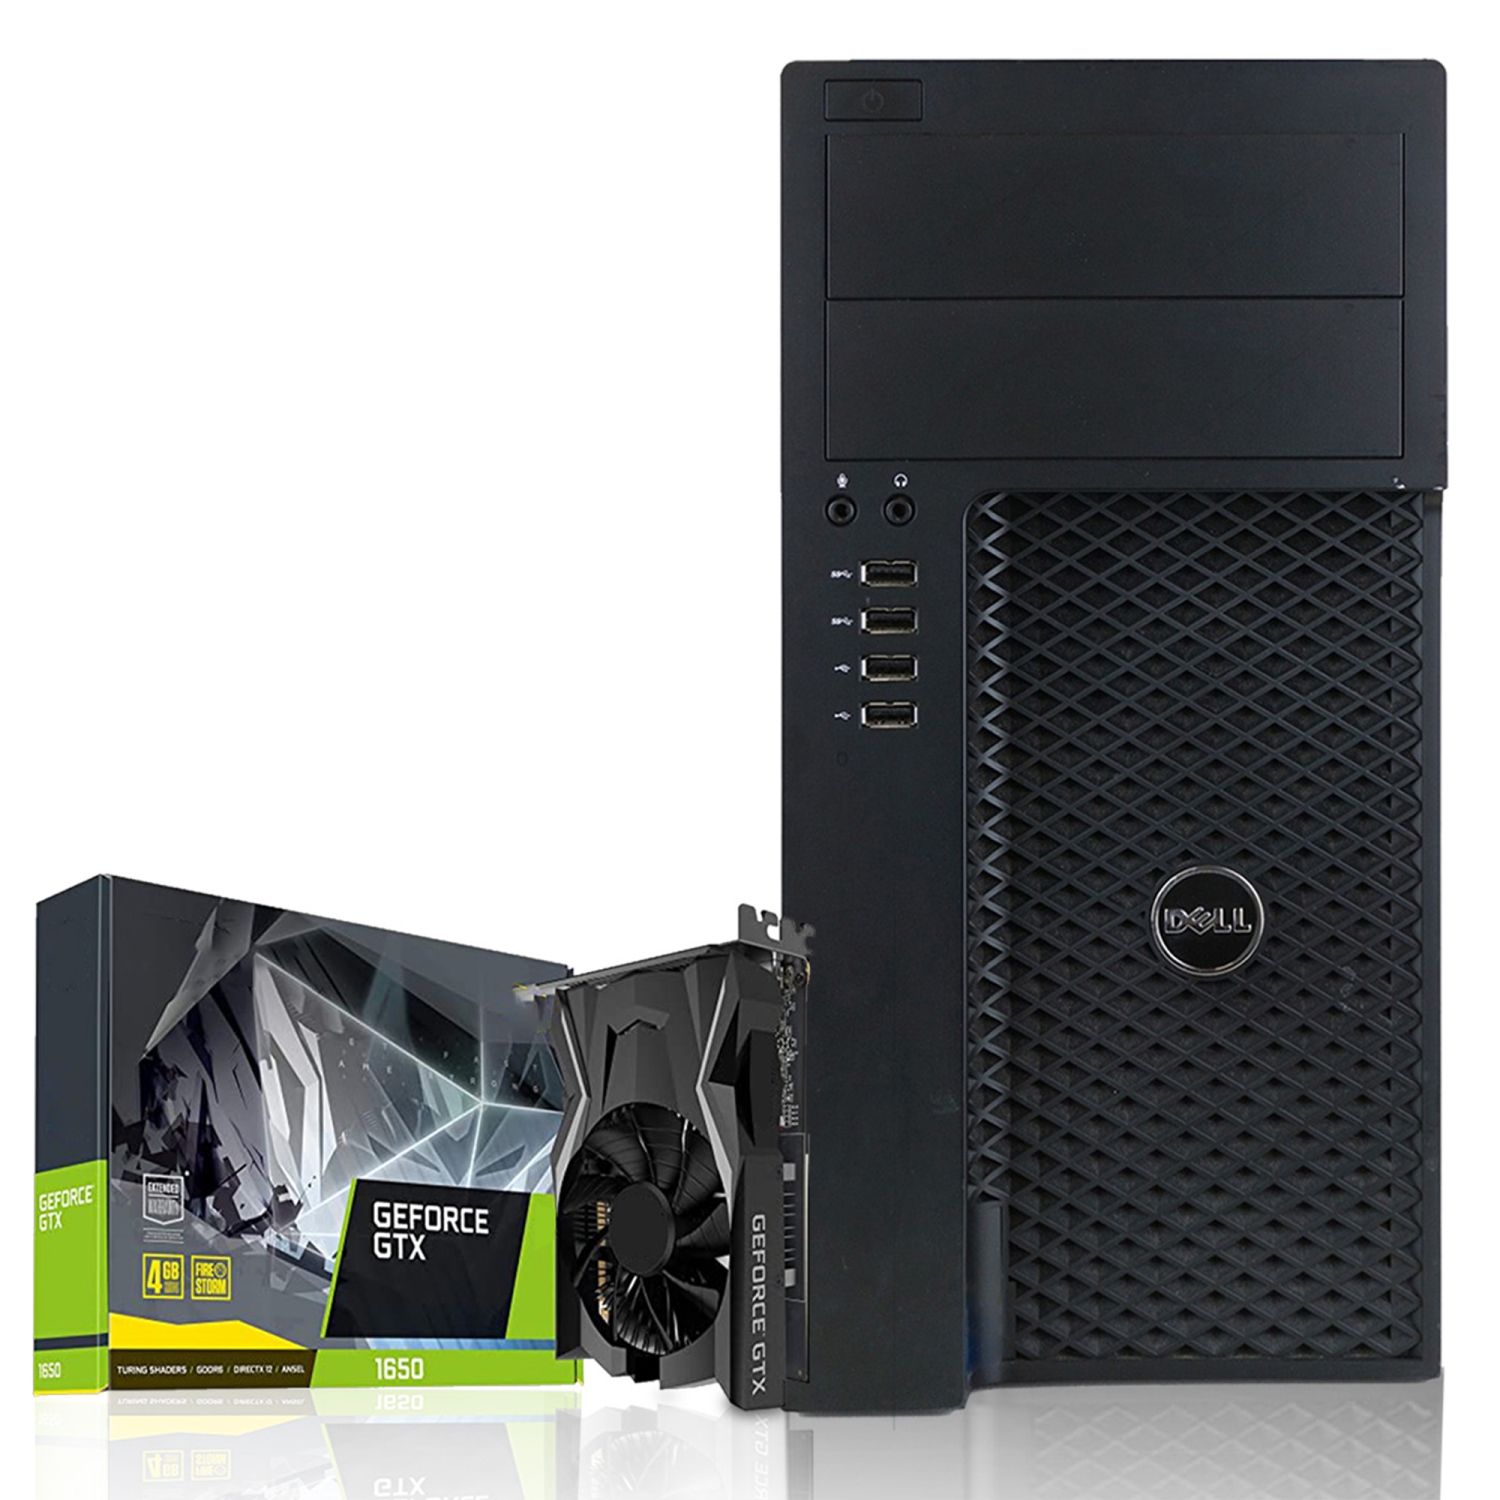 Refurbished (Good) - Dell Precision T1700 Tower Gaming Desktop Computer PC, (Core i7 - 4770 4th GEN/16GB RAM/256GB SSD/GTX 1650/WINDOWS 10 PRO) Intel Processor - Black